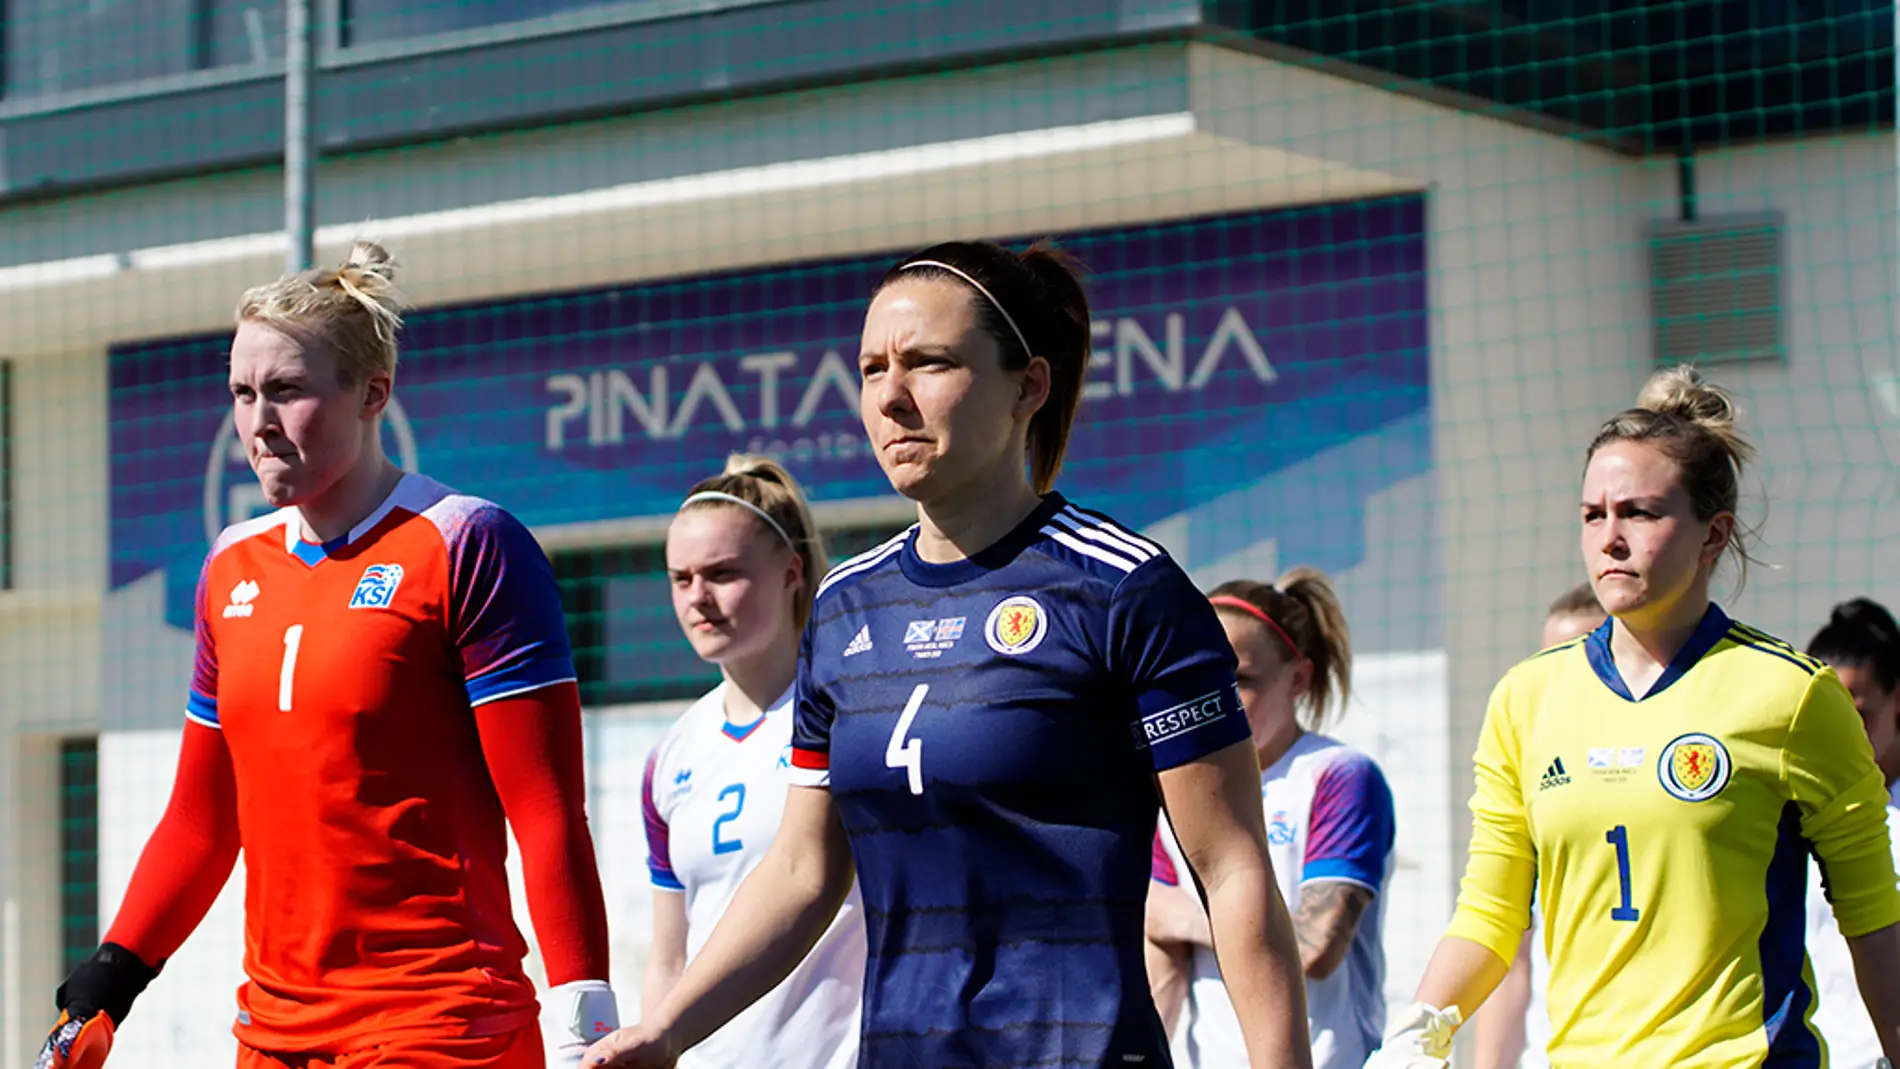 El fútbol femenino de élite se da cita en Pinatar Arena esta semana